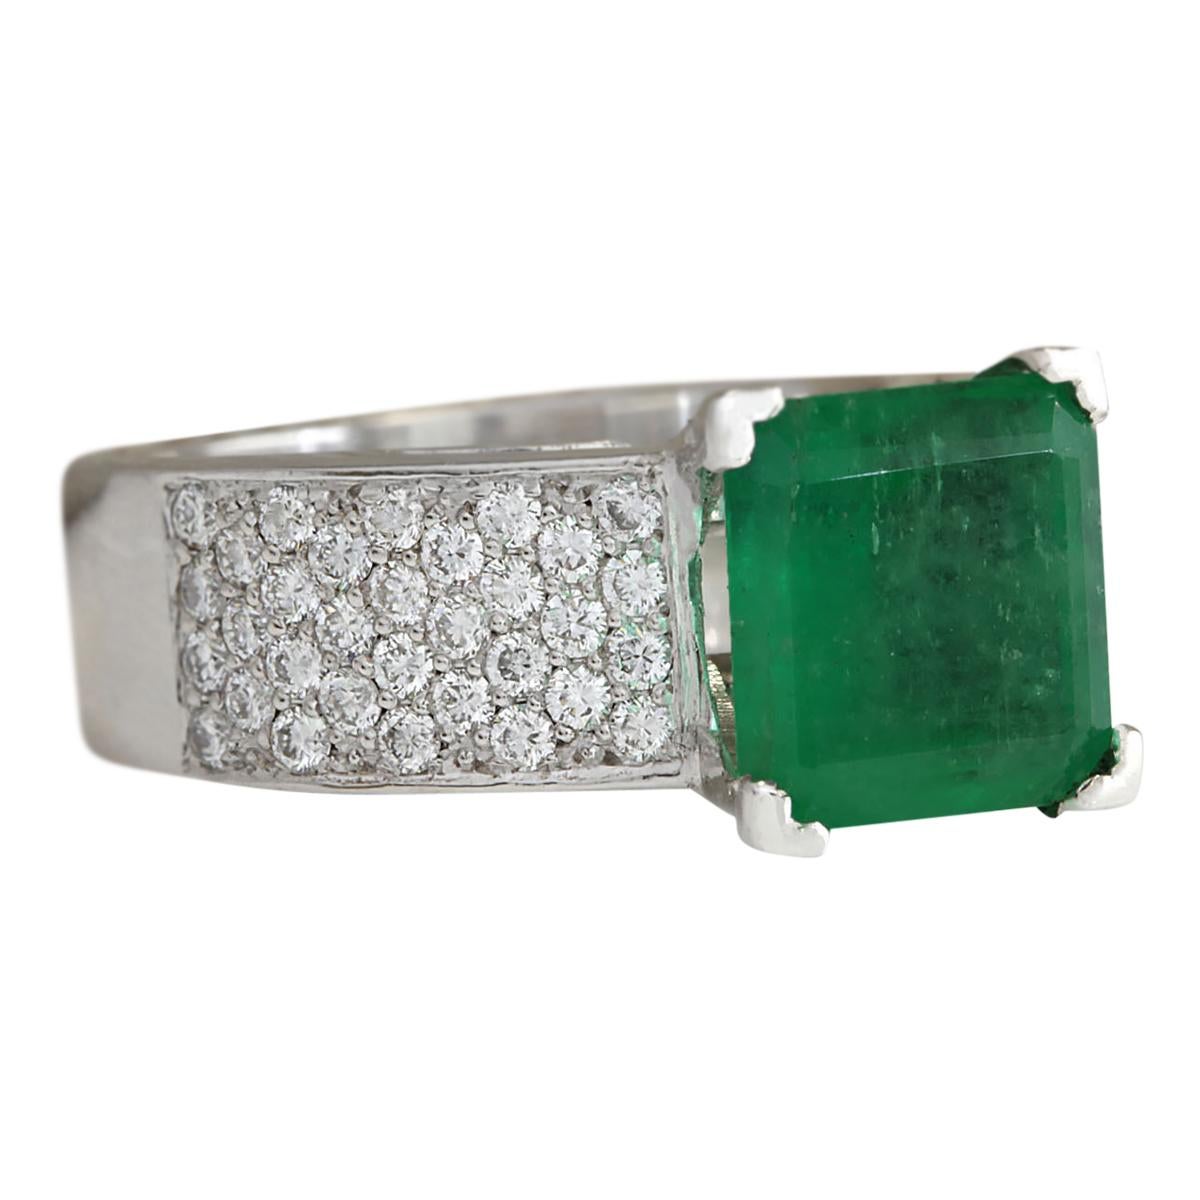 5.66 Carat Emerald 14 Karat White Gold Diamond Ring
Stamped: 14K White Gold
Ring Weight: 14.0 Grams
Emerald Weight is 4.66 Carat (Measures: 10.00x10.00 mm)
Diamond Weight is 1.00 Carat
Color: F-G, Clarity: VS2-SI1
Face Measures: 10.00x10.00 mm
Sku: